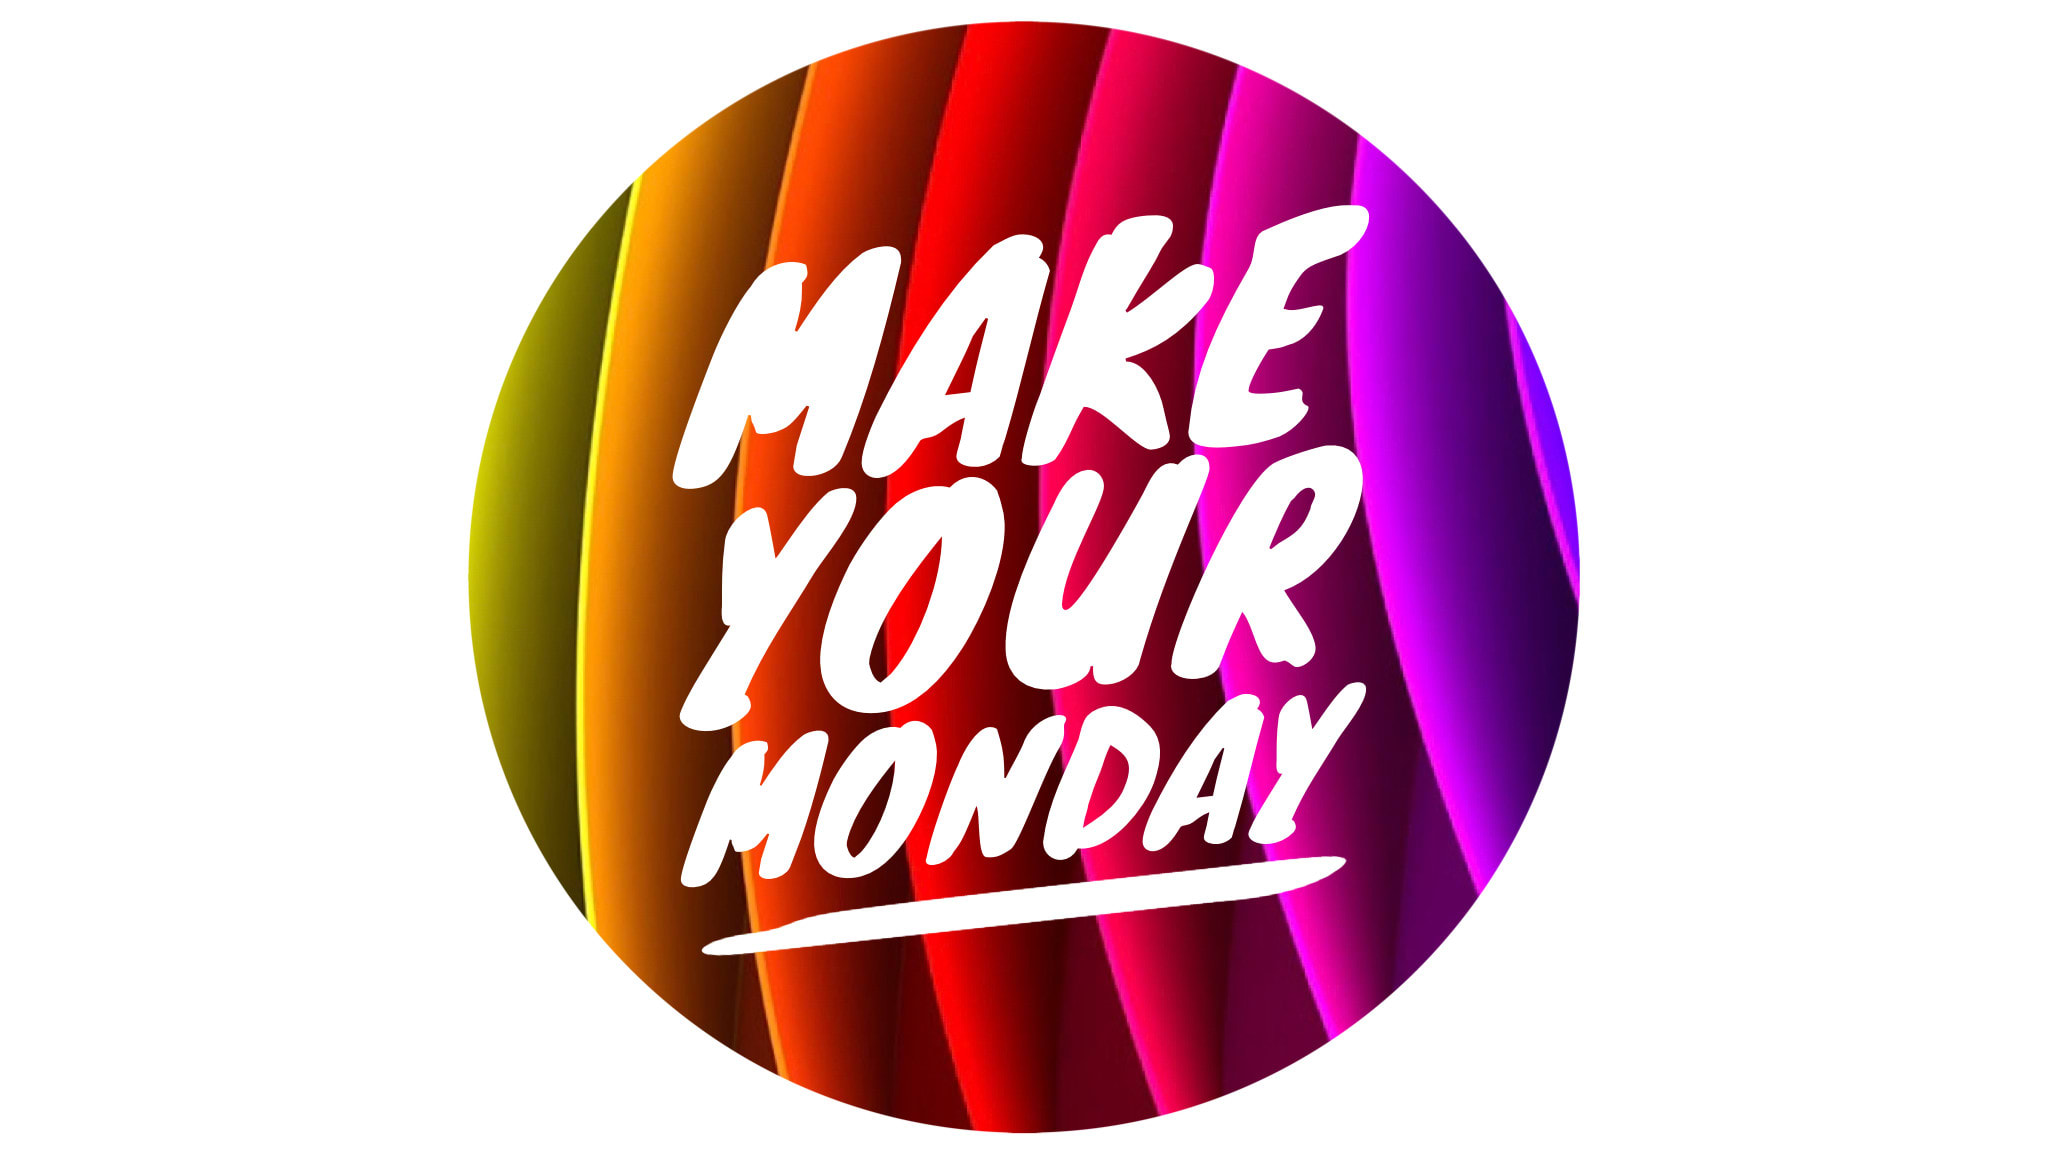 Make Your Monday